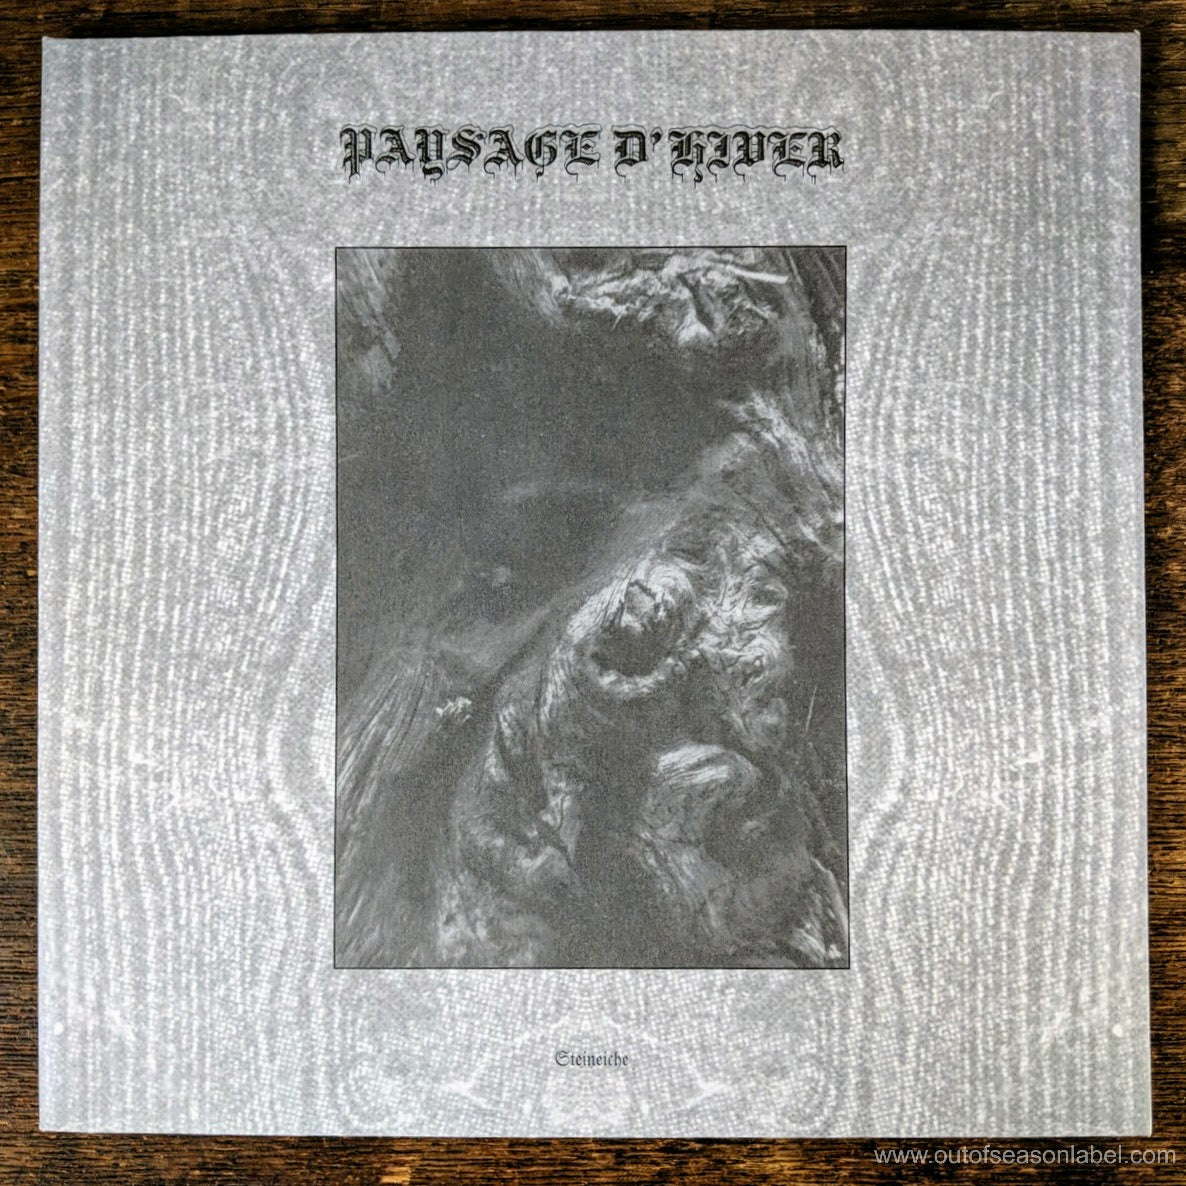 [SOLD OUT] PAYSAGE D'HIVER "Steineiche" Vinyl 2xLP